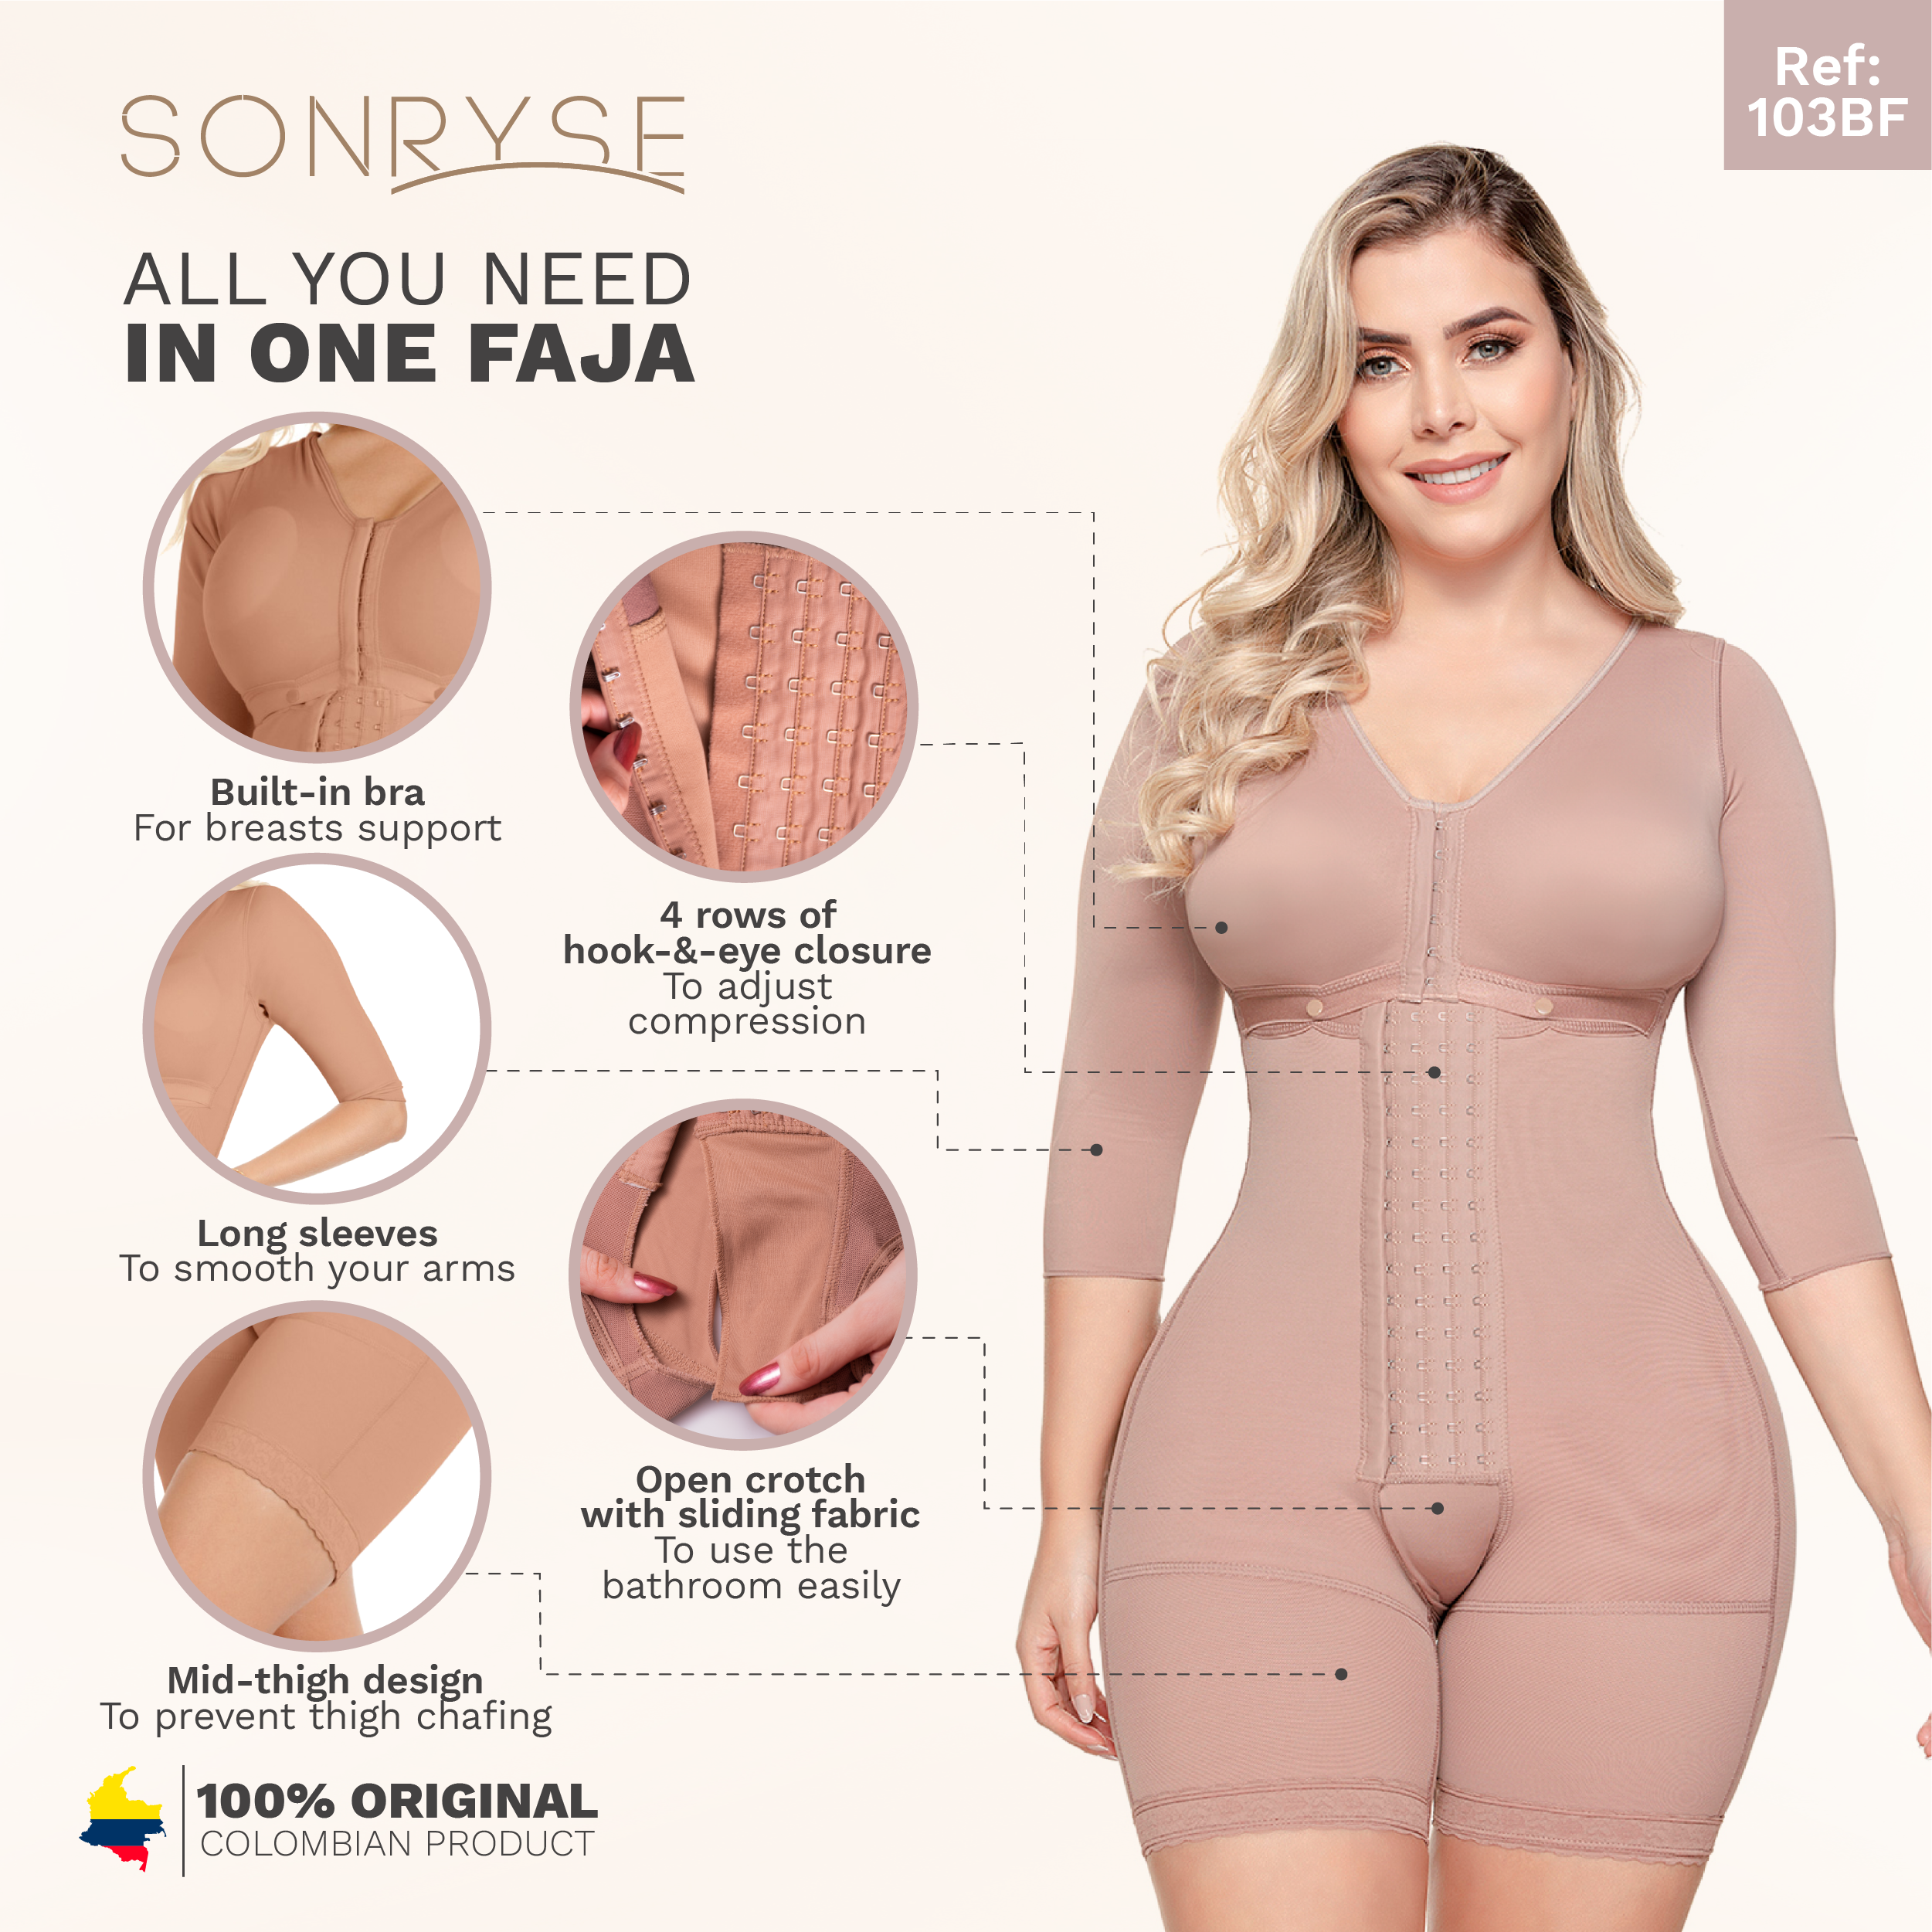 Postpartum C-Section Faja: Full Coverage & Care SON-014 – Fajas Sonryse